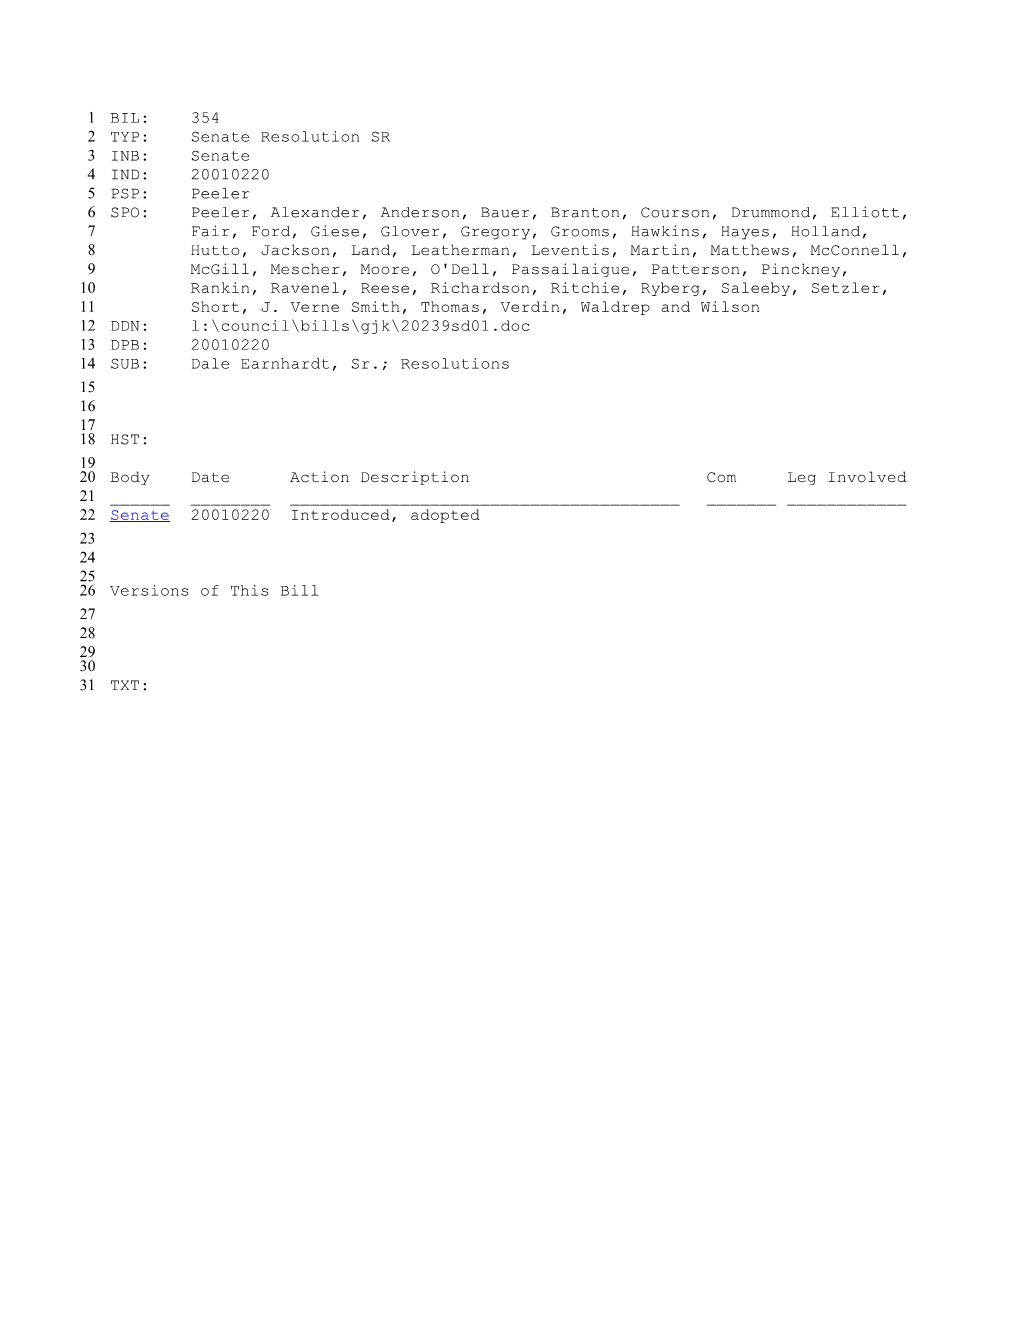 2001-2002 Bill 354: Dale Earnhardt, Sr.; Resolutions - South Carolina Legislature Online